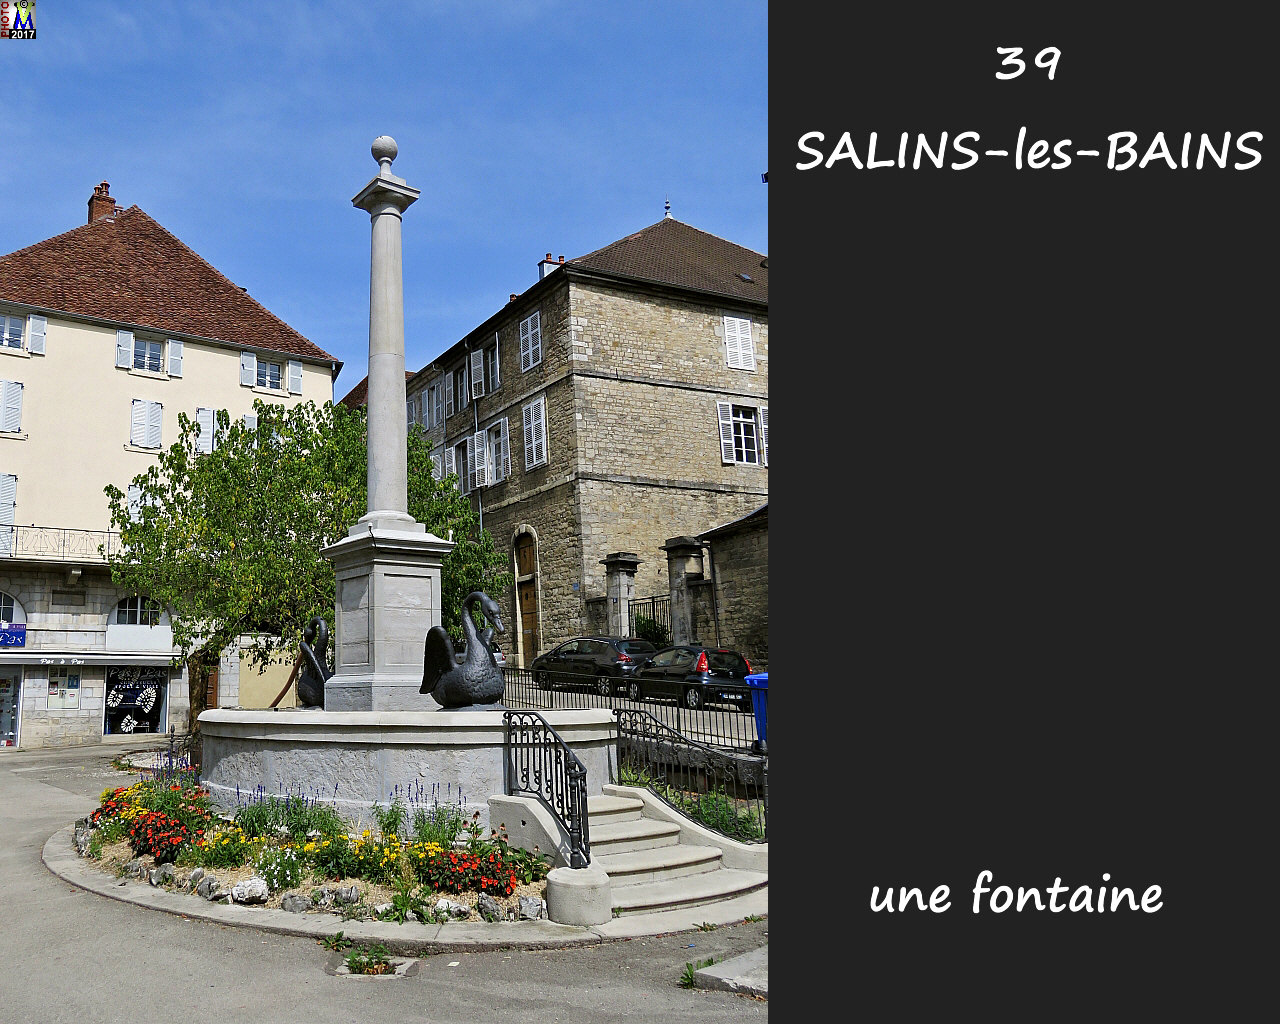 39SALINS-LES-BAINS_fontaine_160.jpg